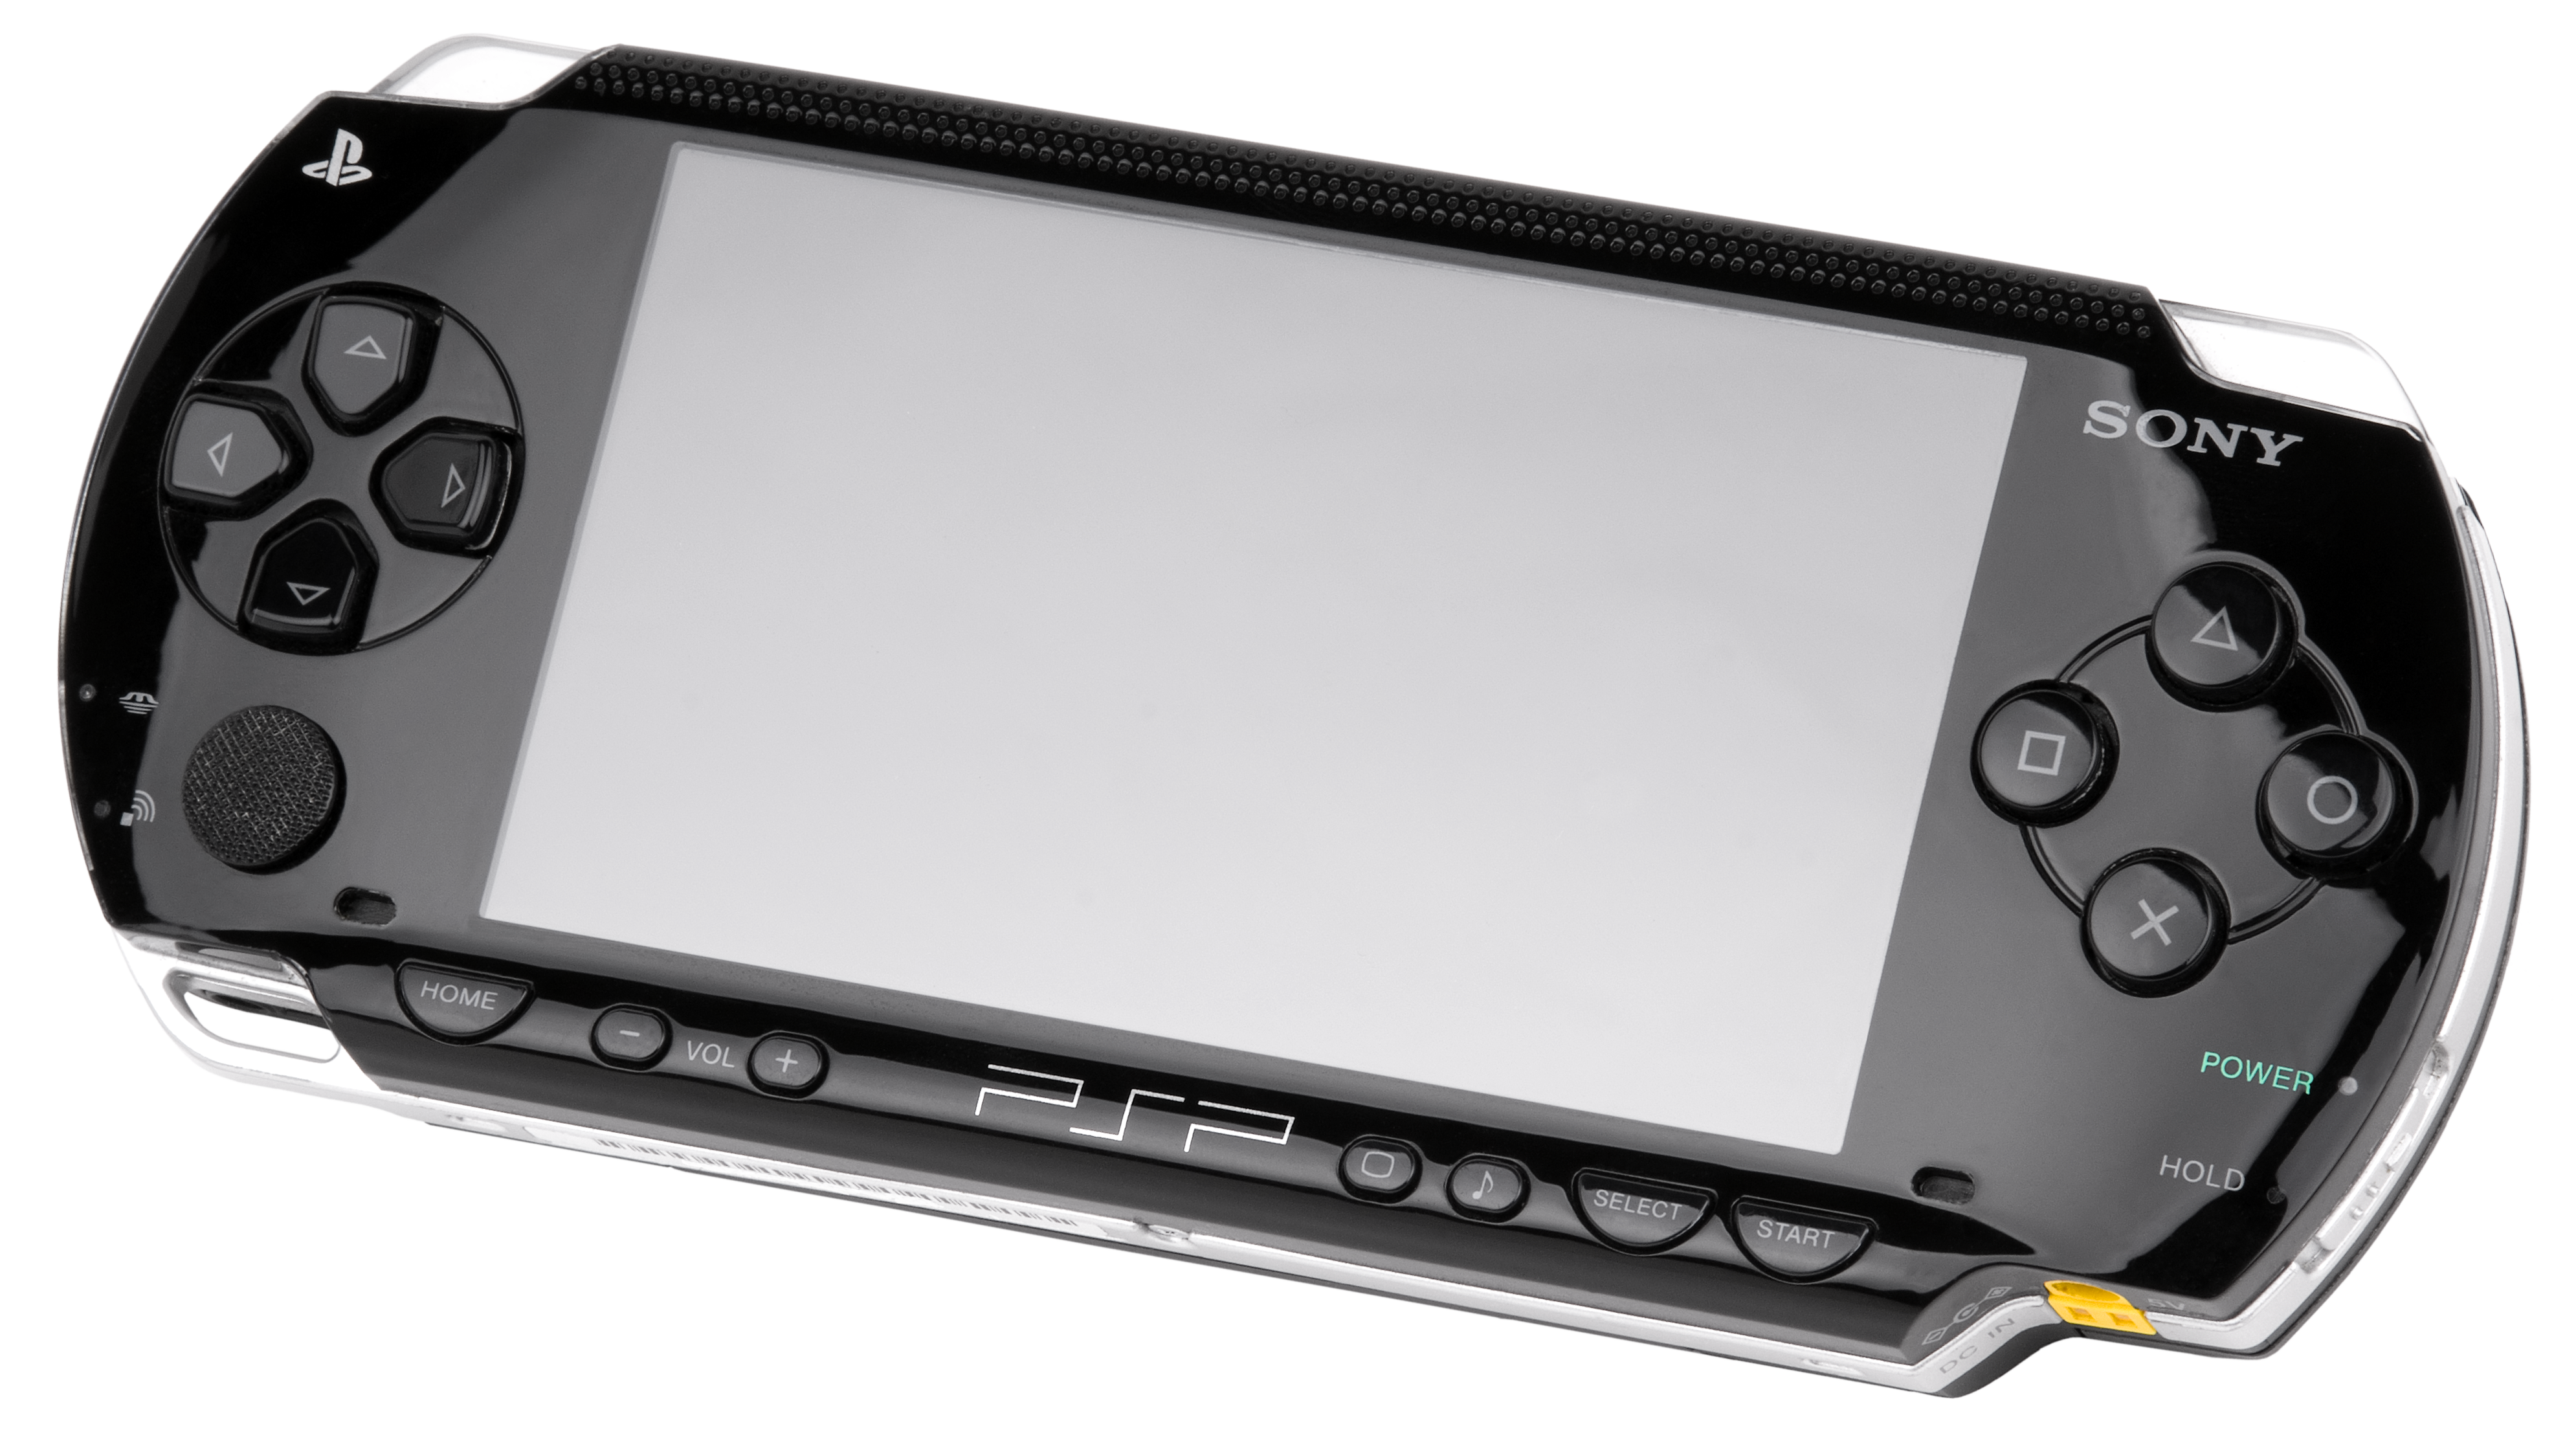 Sony PlayStation Portable (PSP) 3000 Series Handheld Gaming